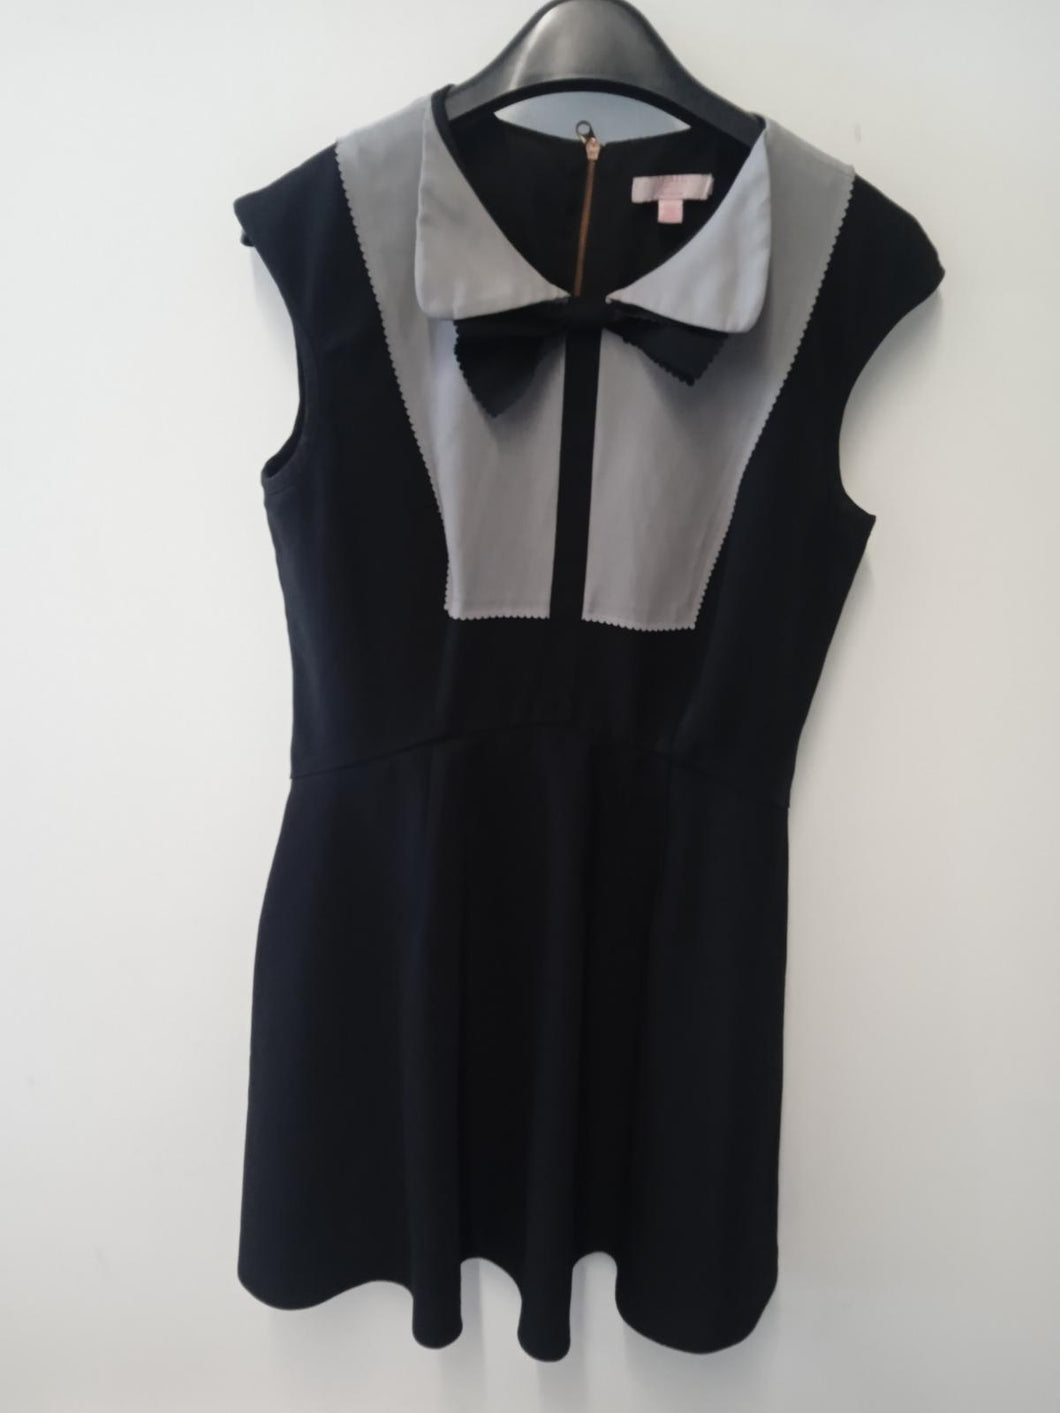 TED BAKER Ladies Black & Grey Sleeveless Collared Shift Dress Size UK M